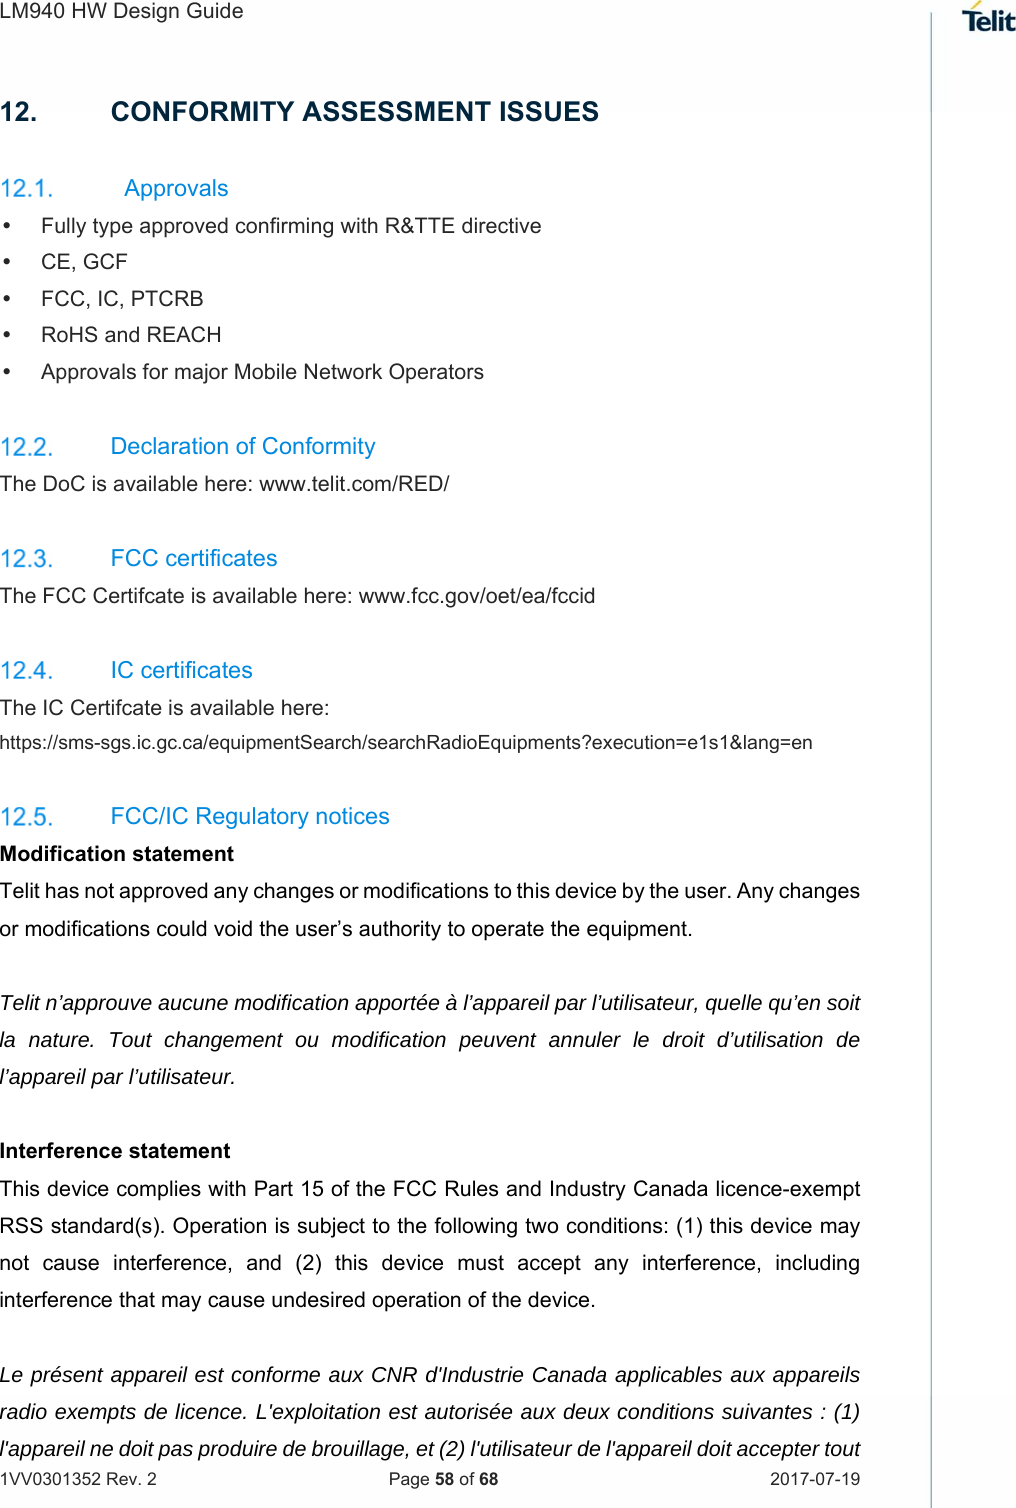 LM940 HW Design Guide   1VV0301352 Rev. 2   Page 58 of 68  2017-07-19  12.  CONFORMITY ASSESSMENT ISSUES   Approvals   Fully type approved confirming with R&amp;TTE directive   CE, GCF   FCC, IC, PTCRB    RoHS and REACH   Approvals for major Mobile Network Operators    Declaration of Conformity  The DoC is available here: www.telit.com/RED/     FCC certificates The FCC Certifcate is available here: www.fcc.gov/oet/ea/fccid     IC certificates The IC Certifcate is available here:  https://sms-sgs.ic.gc.ca/equipmentSearch/searchRadioEquipments?execution=e1s1&amp;lang=en     FCC/IC Regulatory notices Modification statement Telit has not approved any changes or modifications to this device by the user. Any changes or modifications could void the user’s authority to operate the equipment.  Telit n’approuve aucune modification apportée à l’appareil par l’utilisateur, quelle qu’en soit la nature. Tout changement ou modification peuvent annuler le droit d’utilisation de l’appareil par l’utilisateur.  Interference statement This device complies with Part 15 of the FCC Rules and Industry Canada licence-exempt RSS standard(s). Operation is subject to the following two conditions: (1) this device may not  cause  interference,  and  (2)  this  device  must  accept  any  interference,  including interference that may cause undesired operation of the device.  Le présent appareil est conforme aux CNR d&apos;Industrie Canada applicables aux appareils radio exempts de licence. L&apos;exploitation est autorisée aux deux conditions suivantes : (1) l&apos;appareil ne doit pas produire de brouillage, et (2) l&apos;utilisateur de l&apos;appareil doit accepter tout 